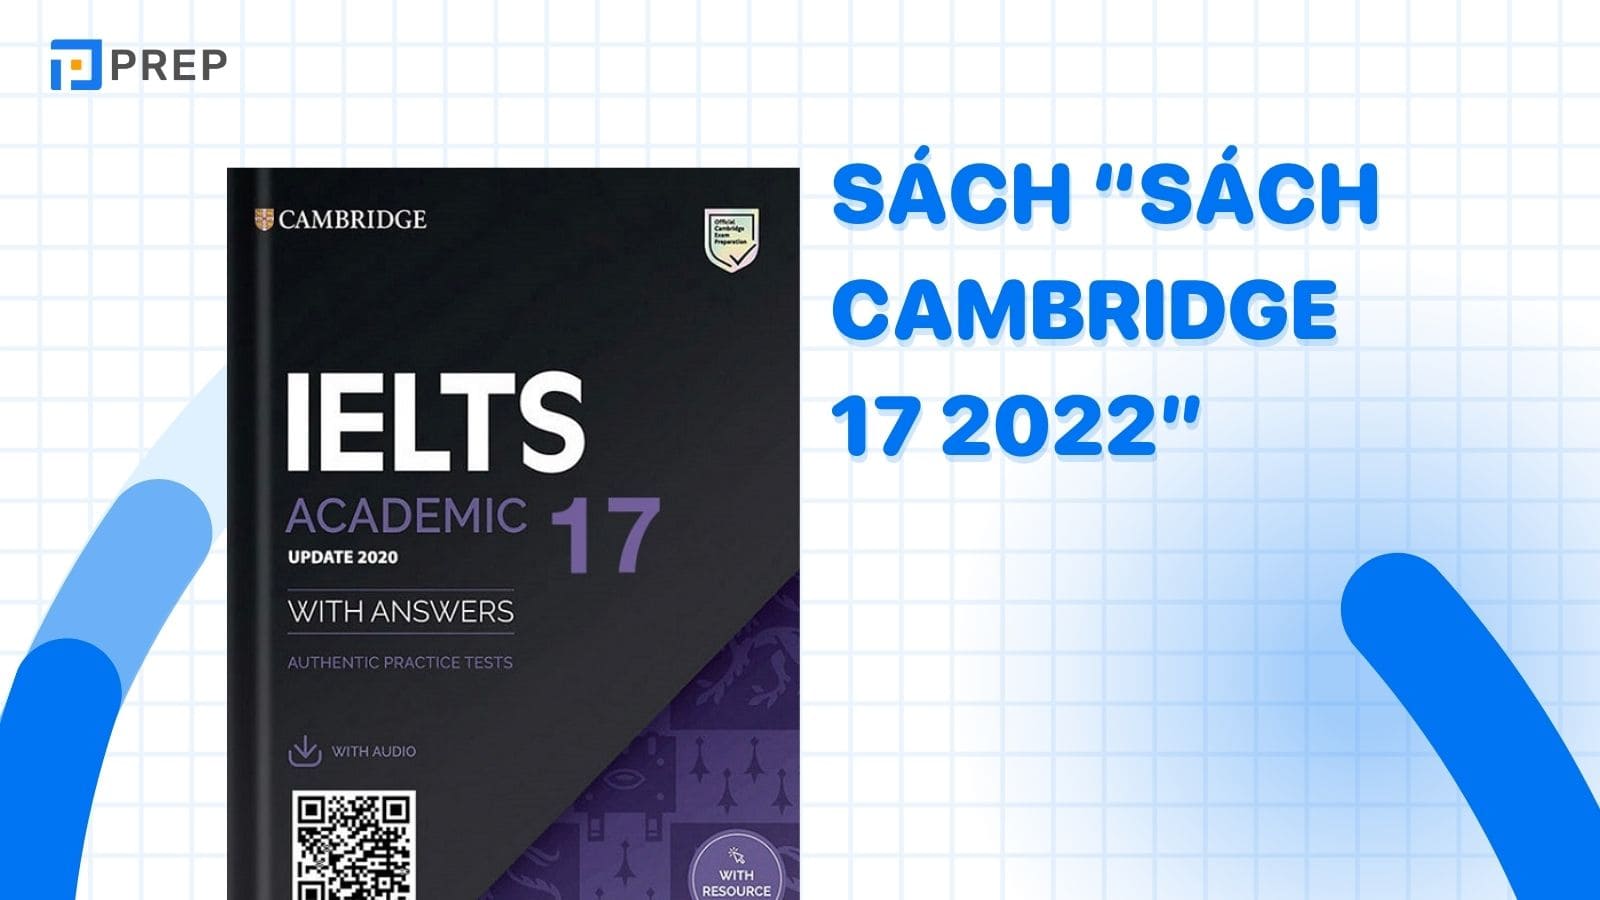 sach-cambridge-17-2022.jpg